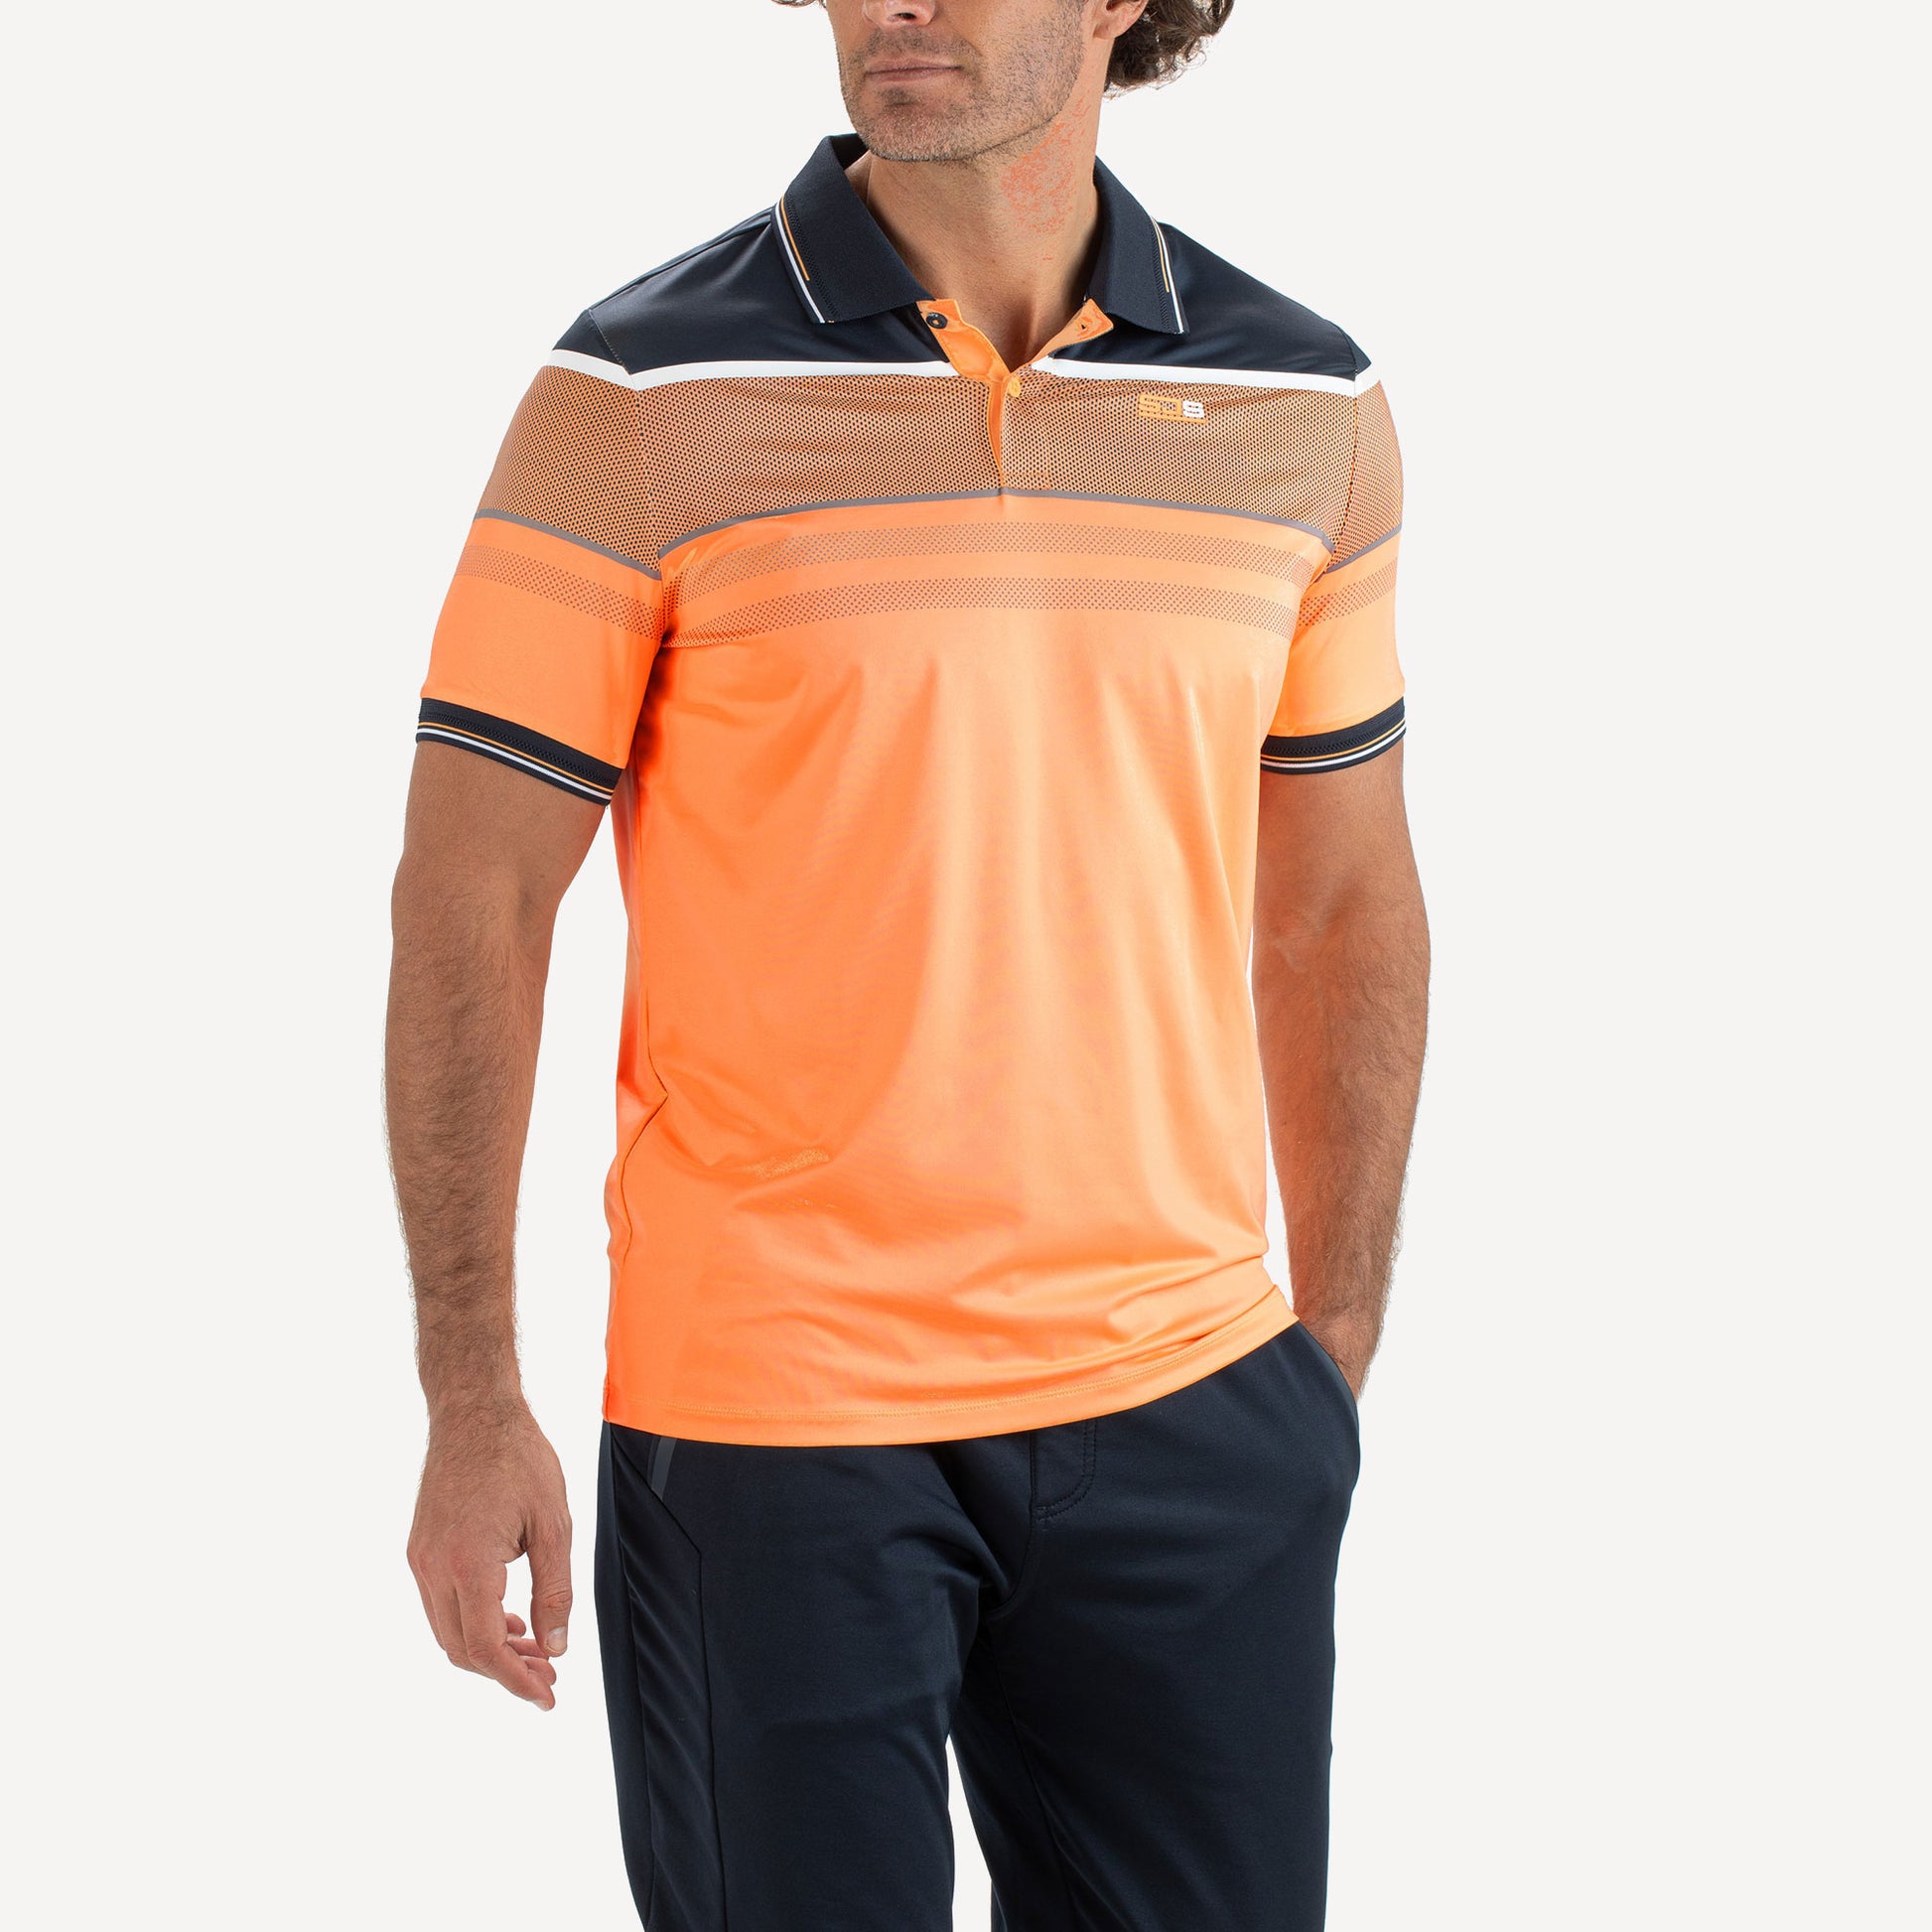 Sjeng Sports Jorick Men's Tennis Polo Orange (1)